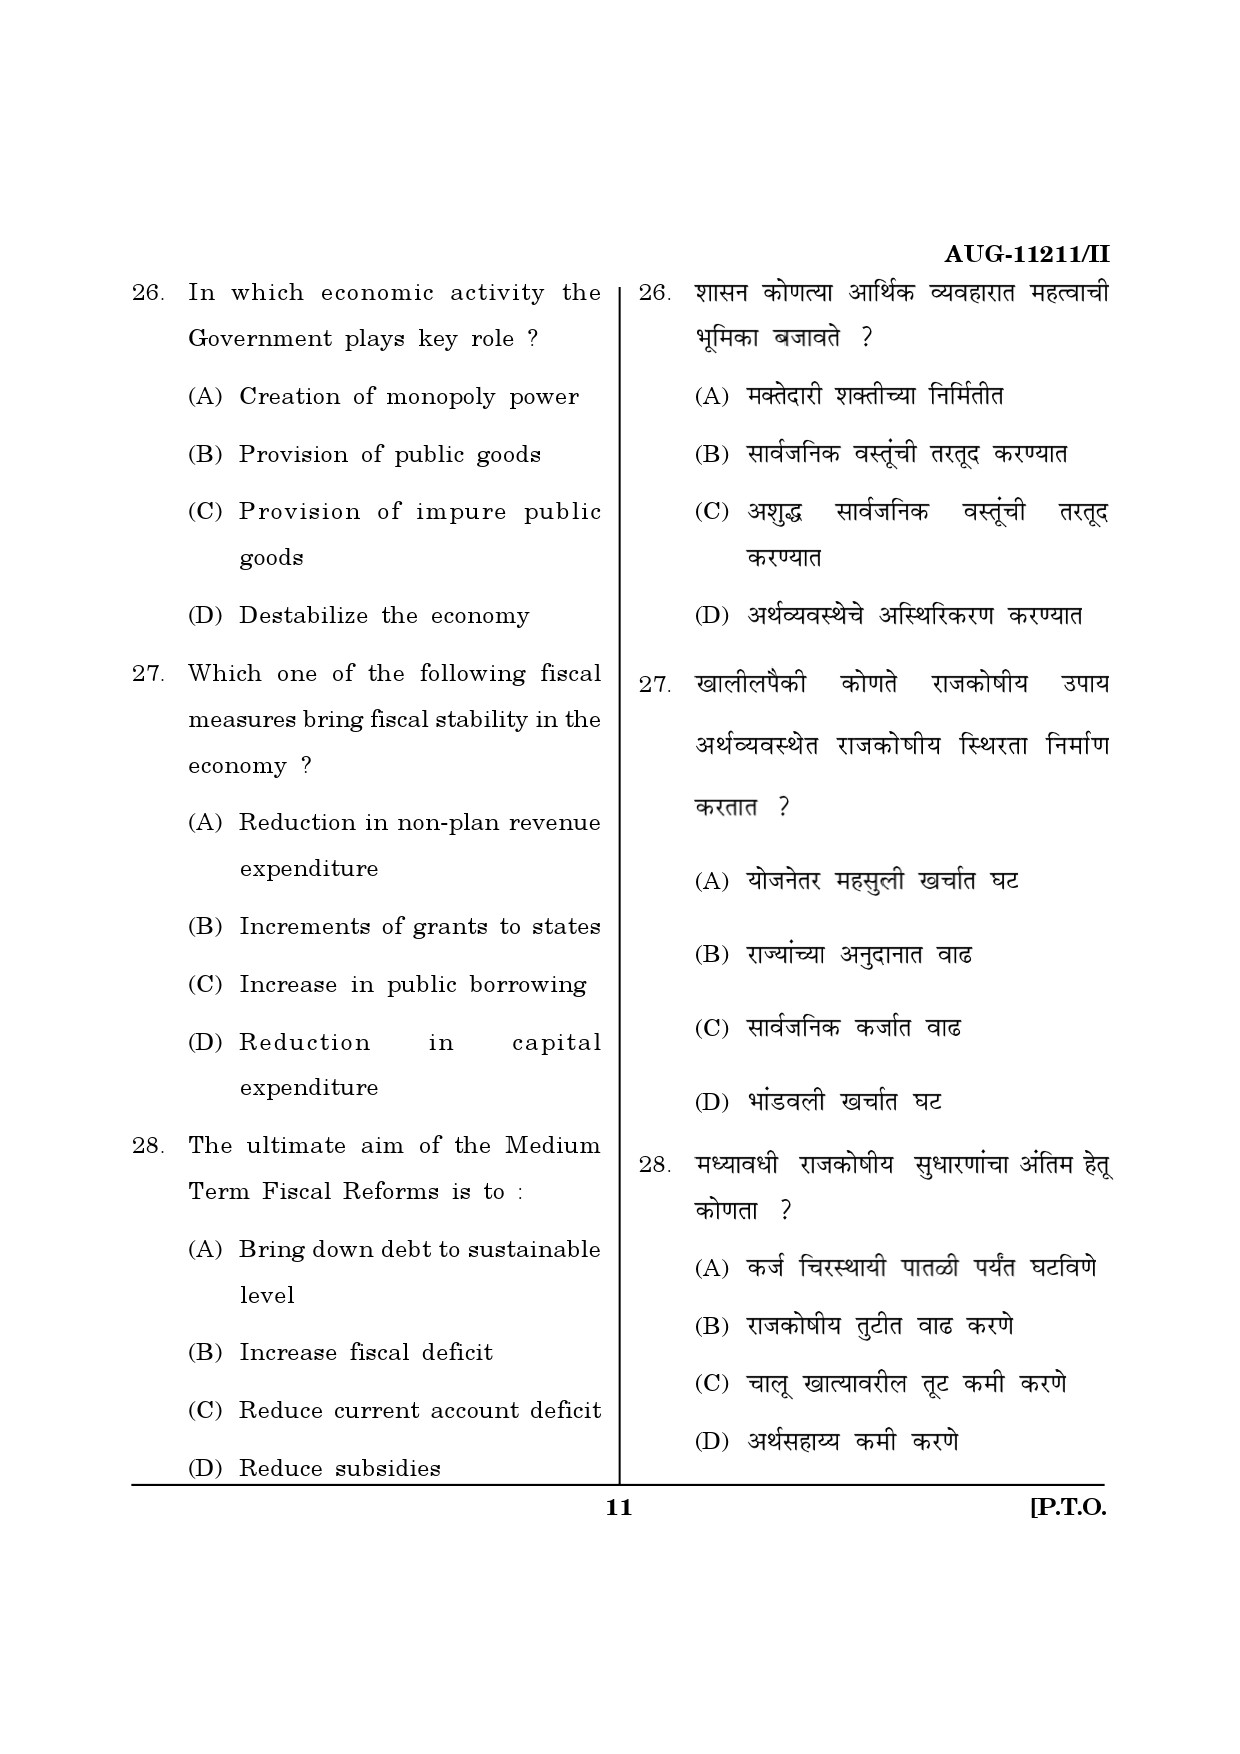 Maharashtra SET Economics Question Paper II August 2011 11